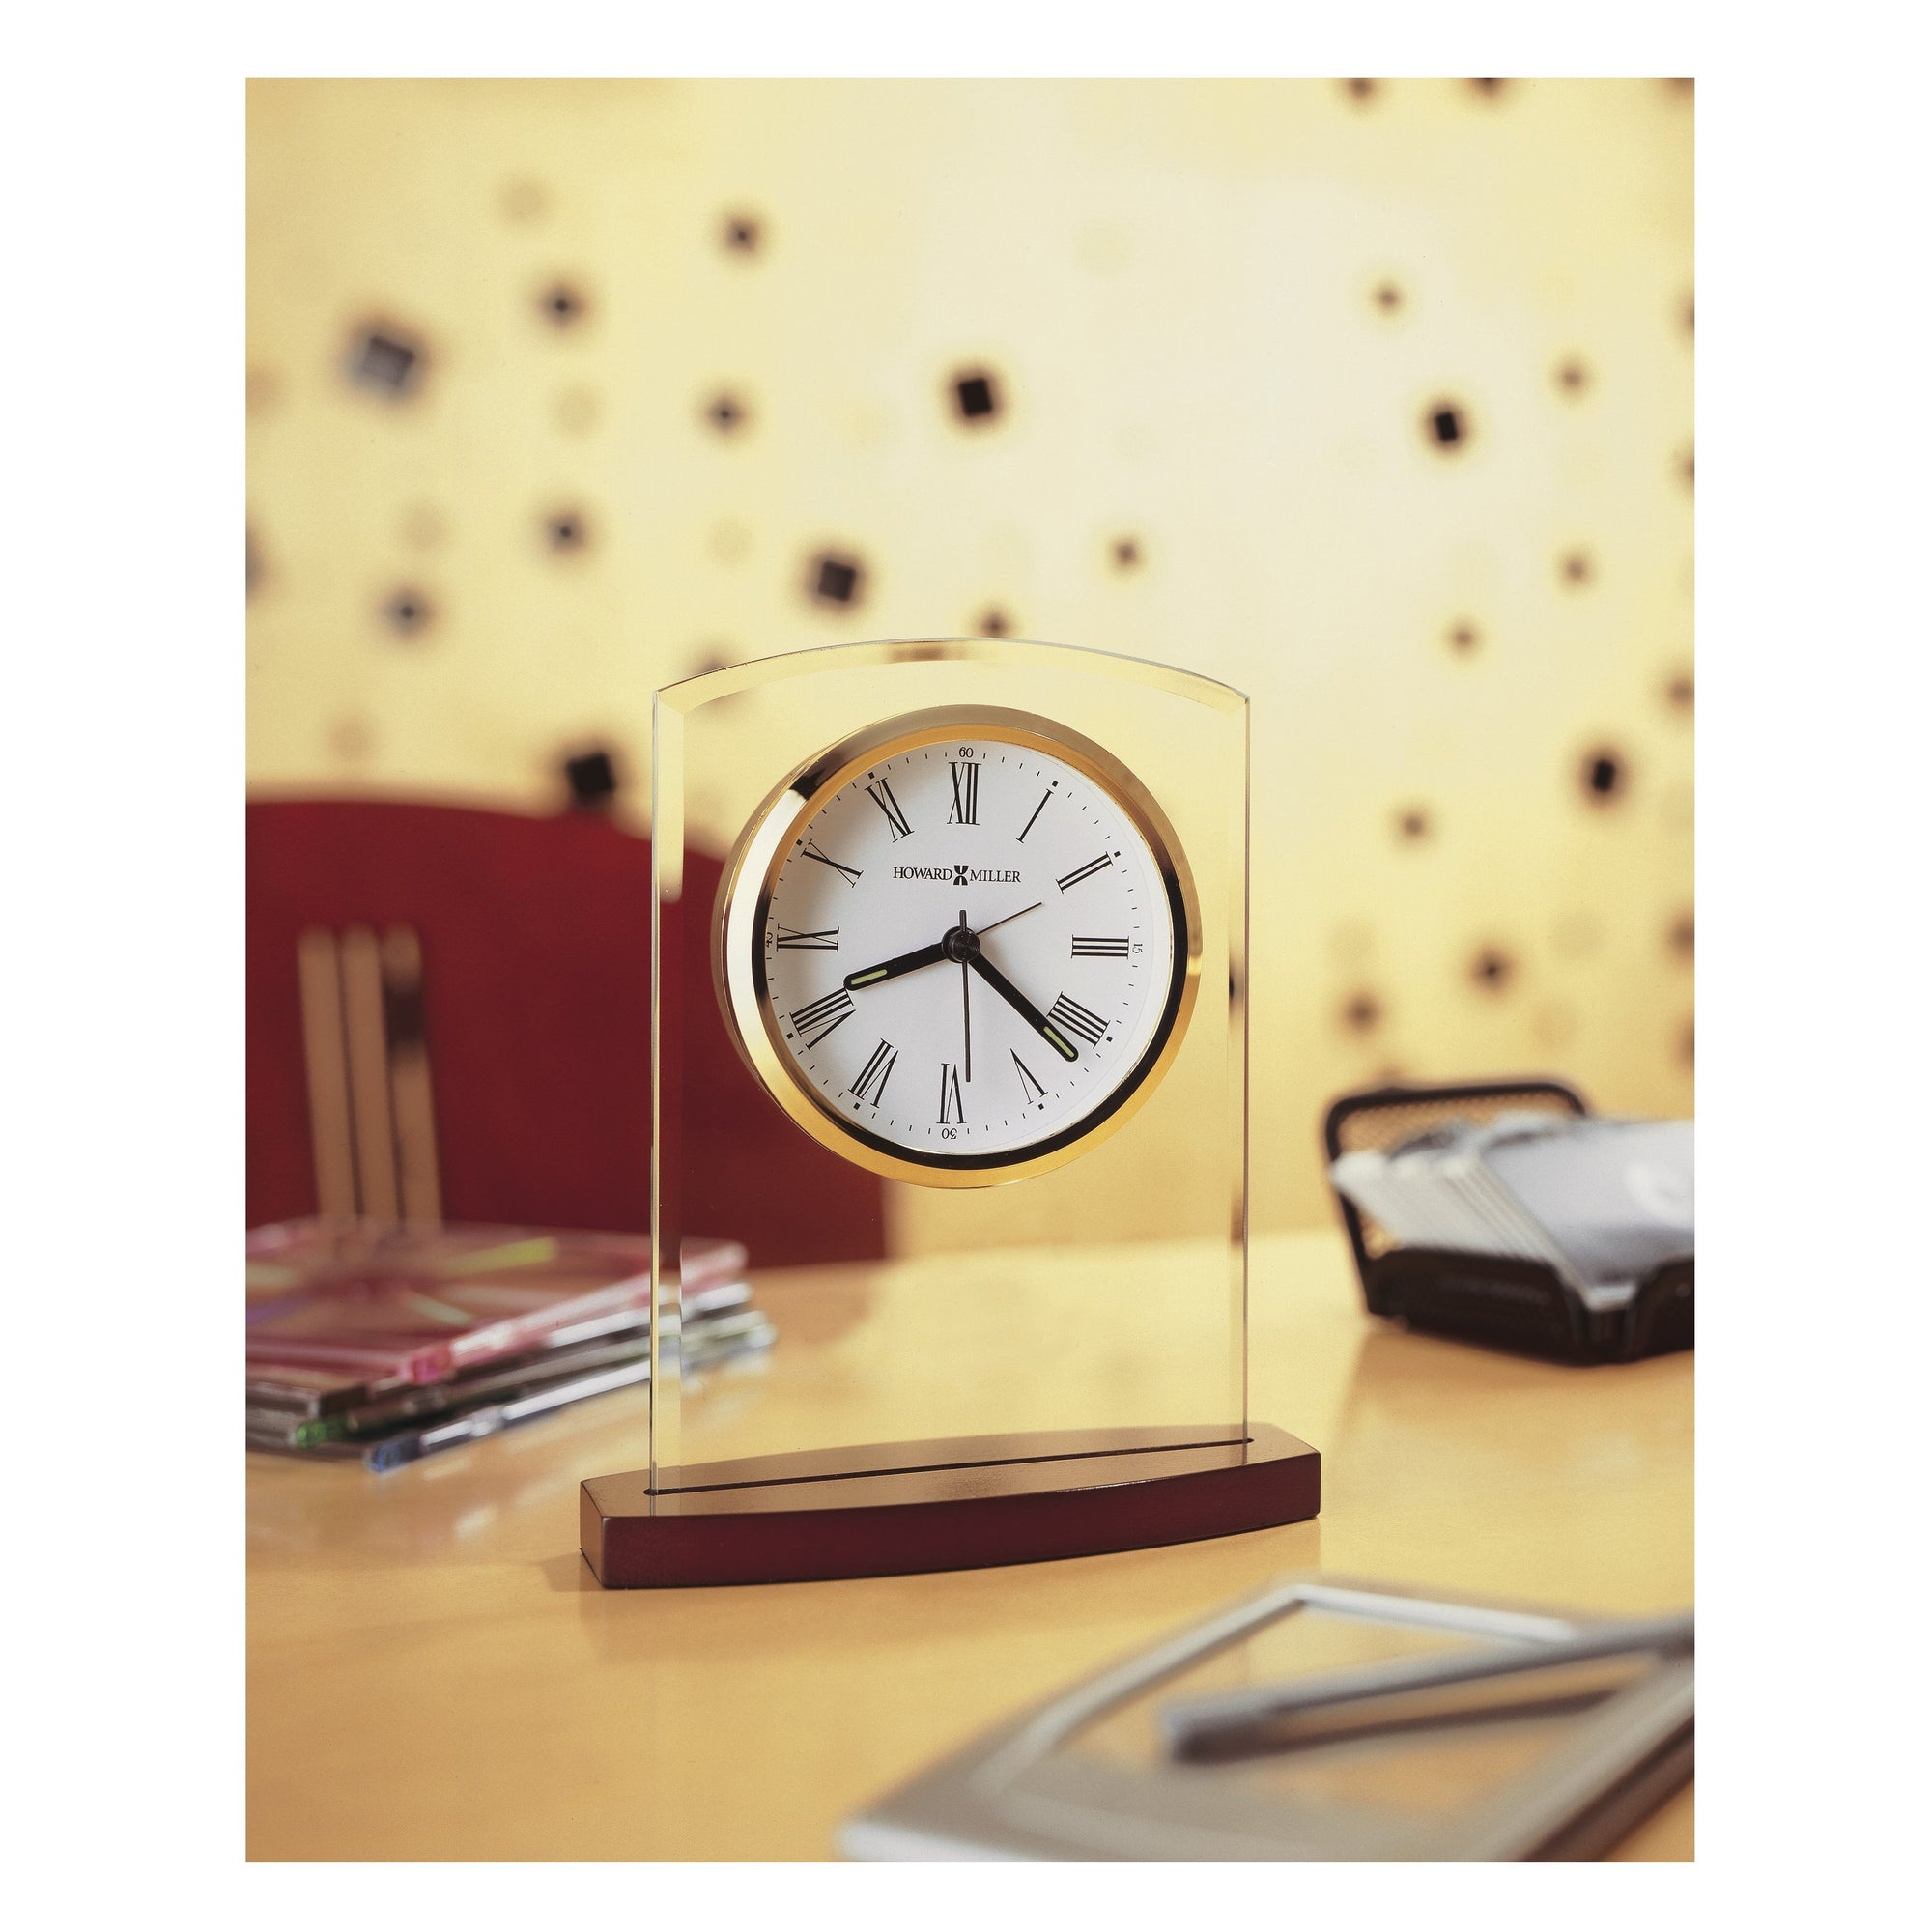 Howard Miller Marcus Table Clock 645580 - Premier Clocks